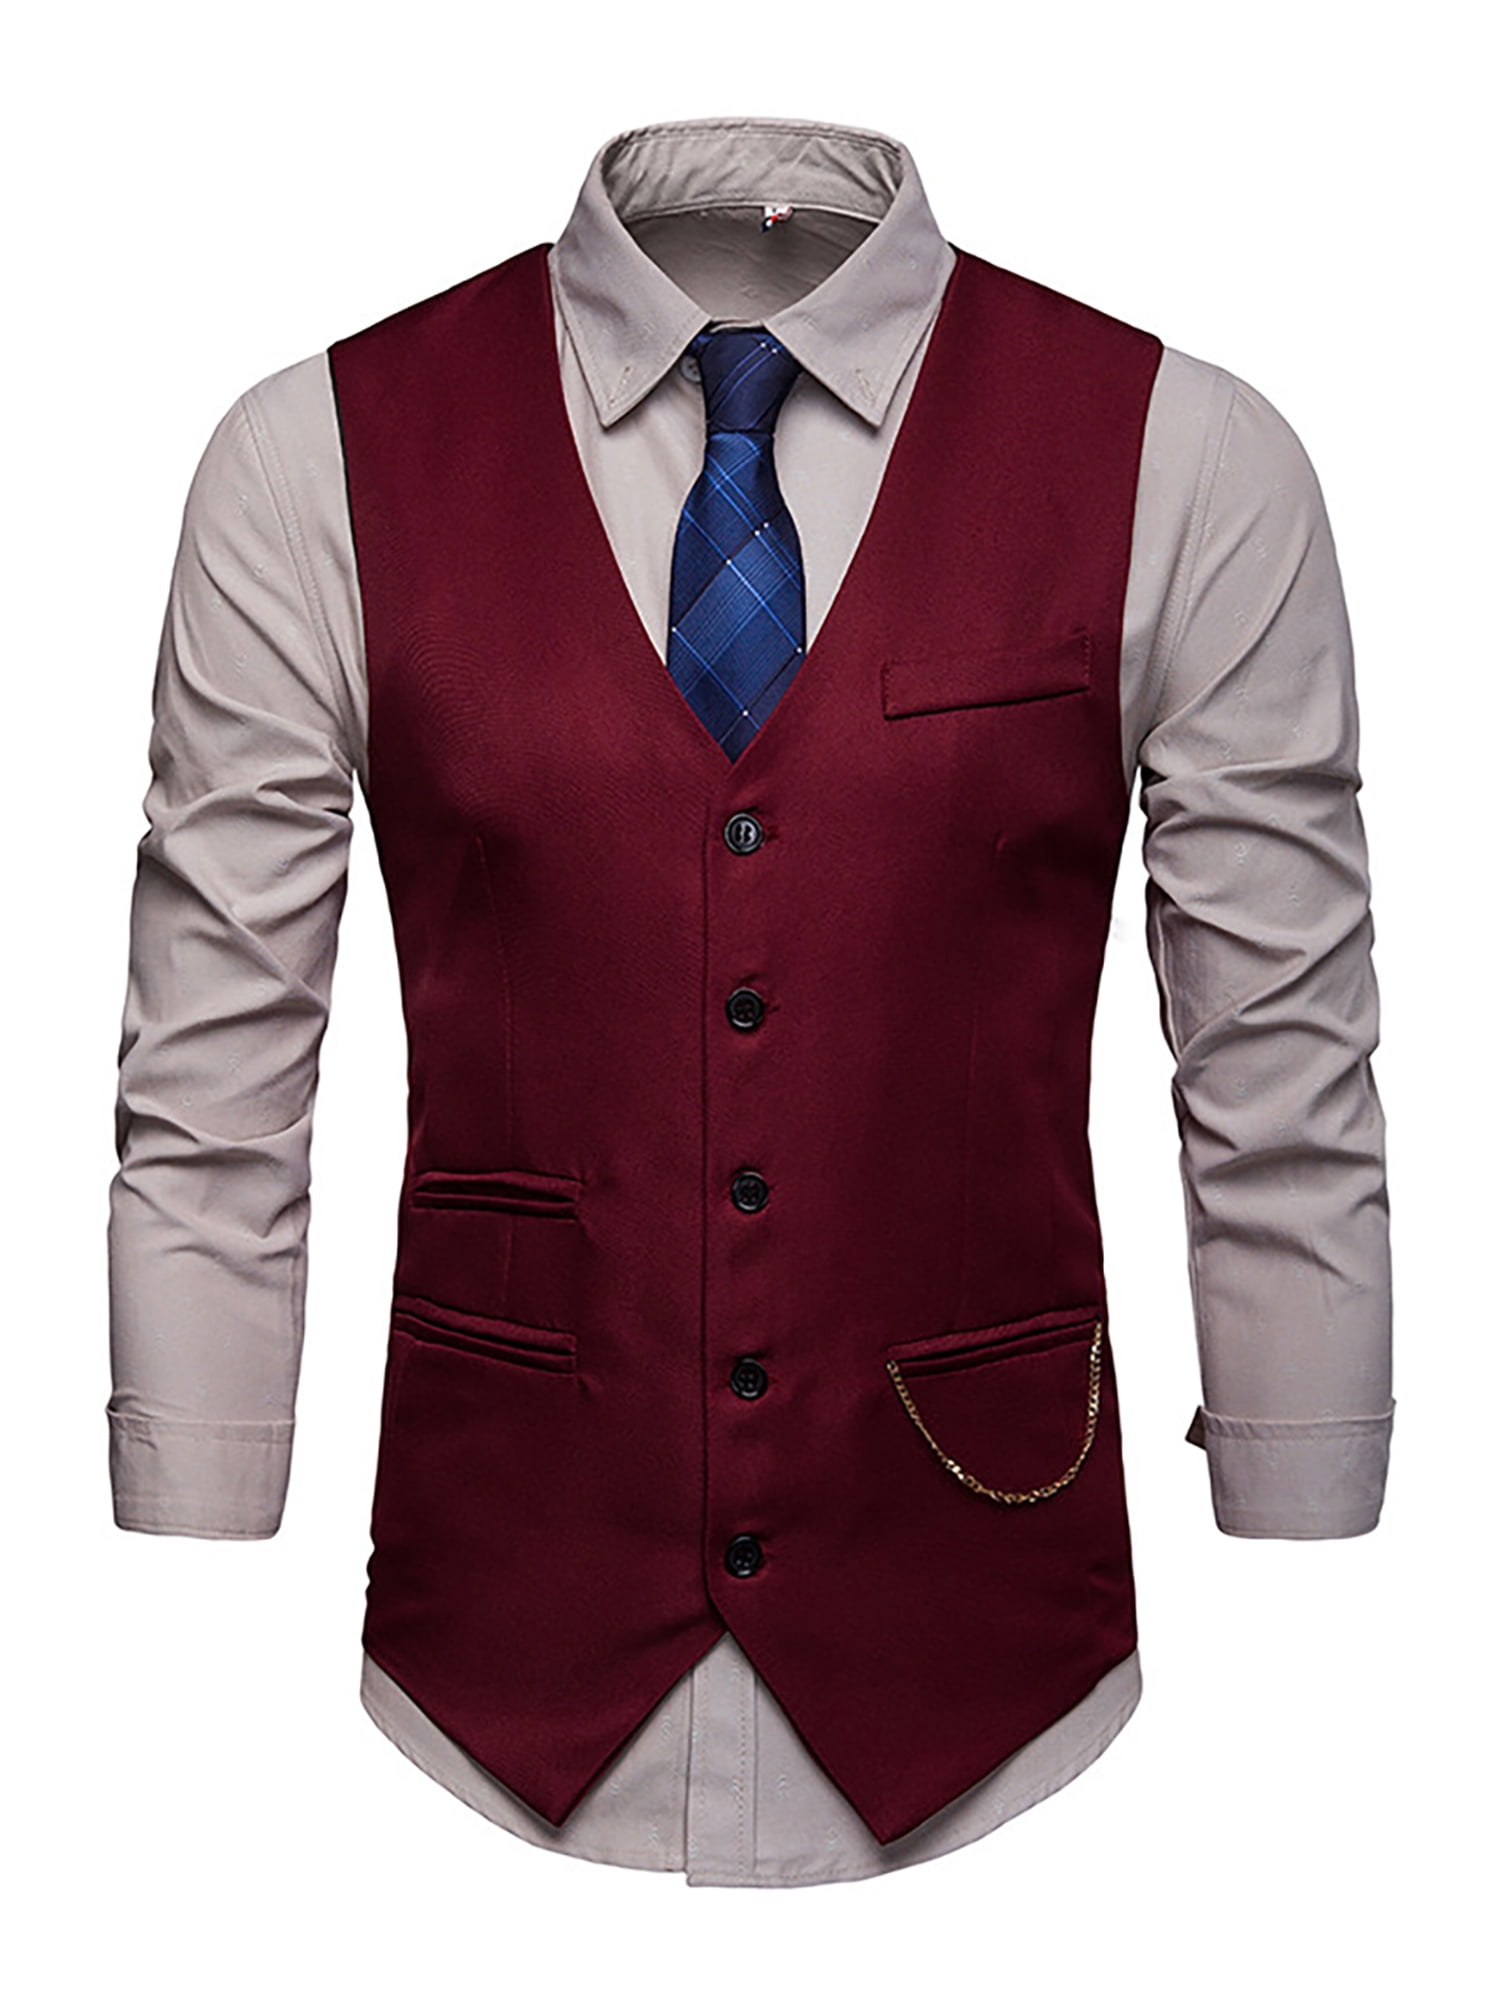 WAWAYA Men Sleeveless Single Breasted Corduroy Business Dress Suit Vest Waistcoat